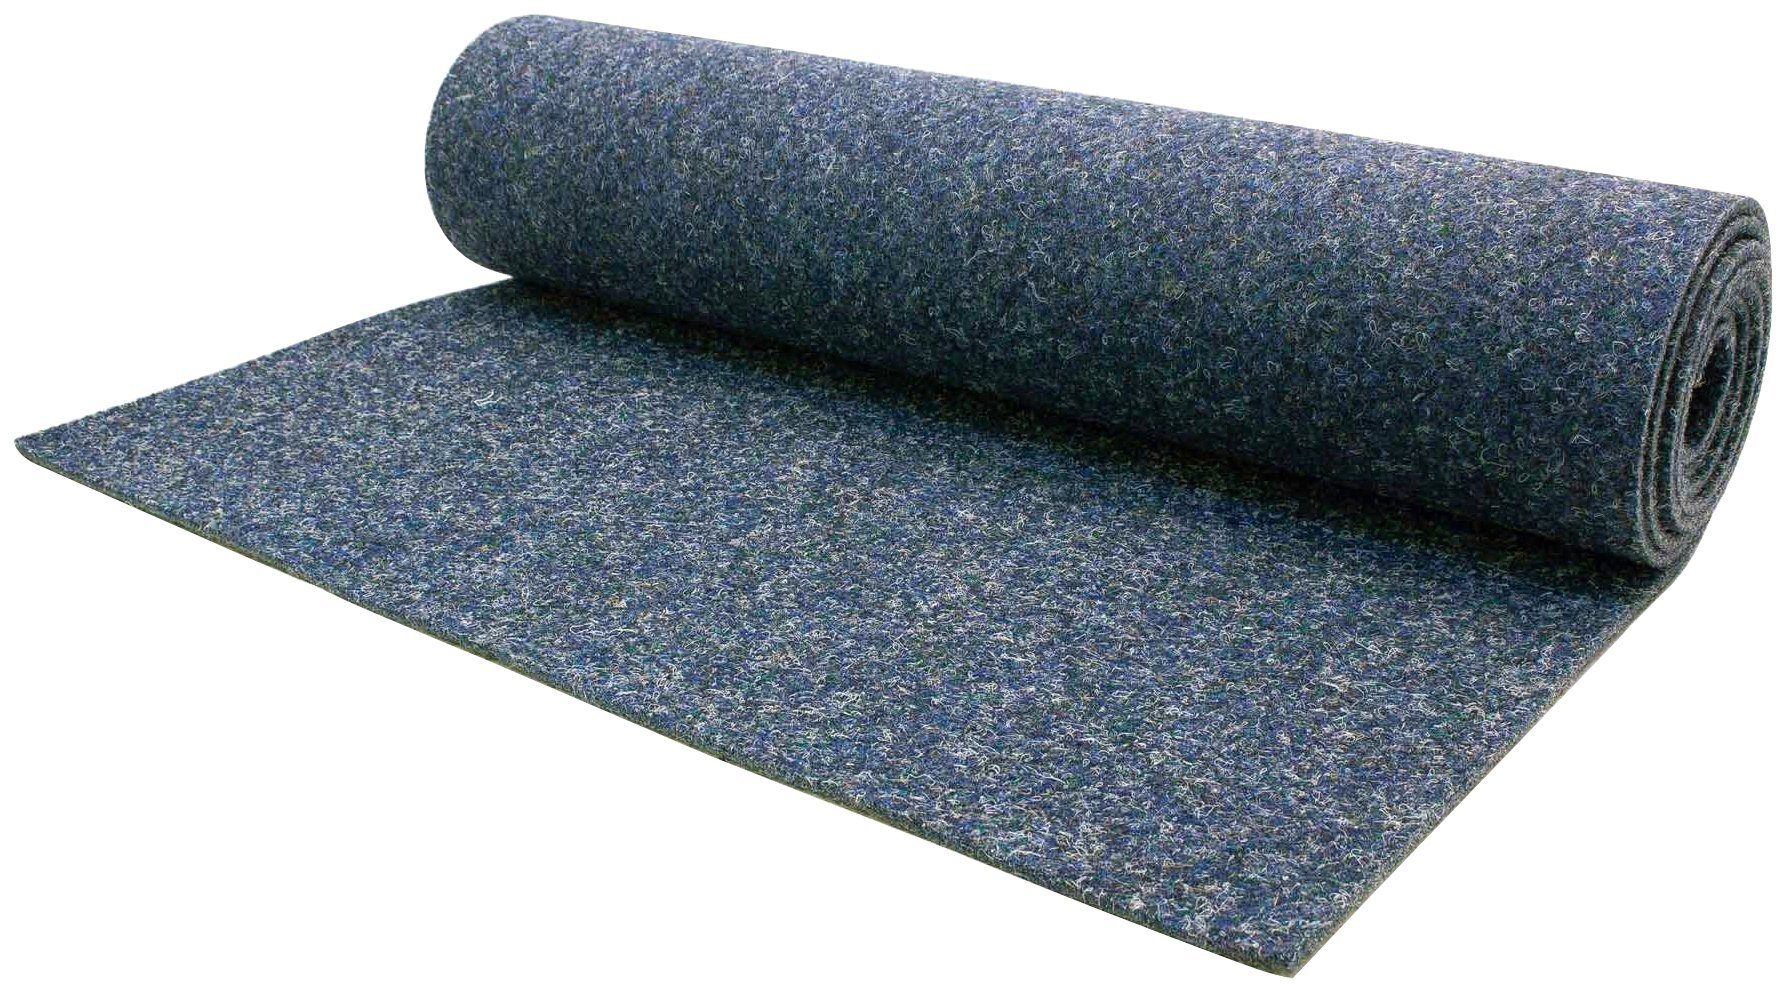 Nadelvliesteppich MERLIN, Primaflor-Ideen in Textil, rechteckig, Höhe: 5,2 mm, Flachgewebe, Nadelvlies, meliert, besonders robust & strapazierfähig blau